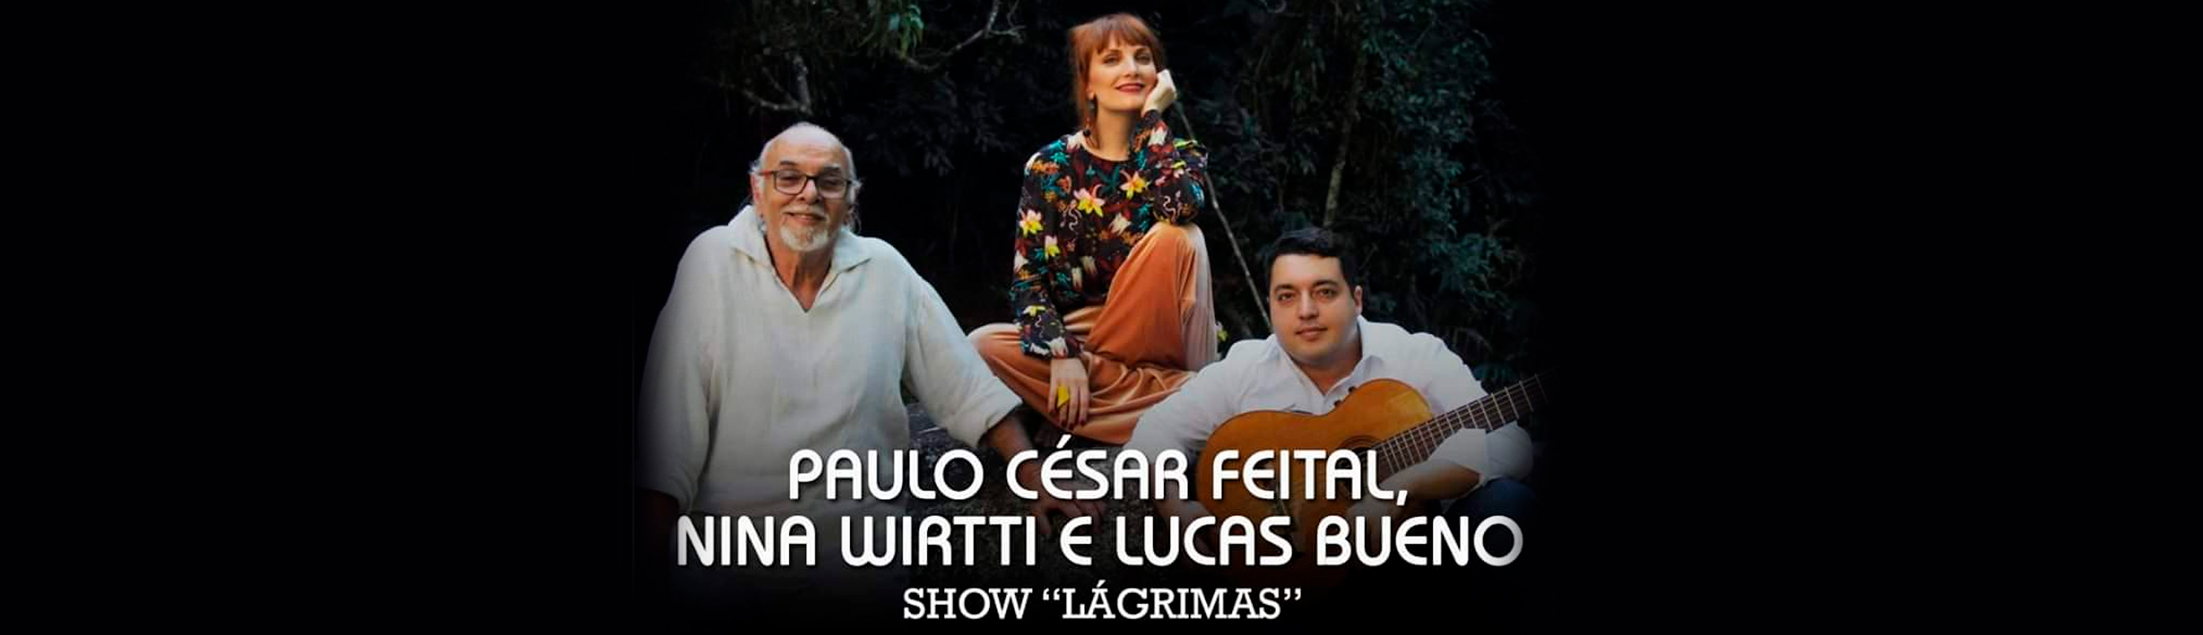 Show 'Lágrimas', com Paulo César Feital, Lucas Bueno e Nina Wirtti no Teatro Rival